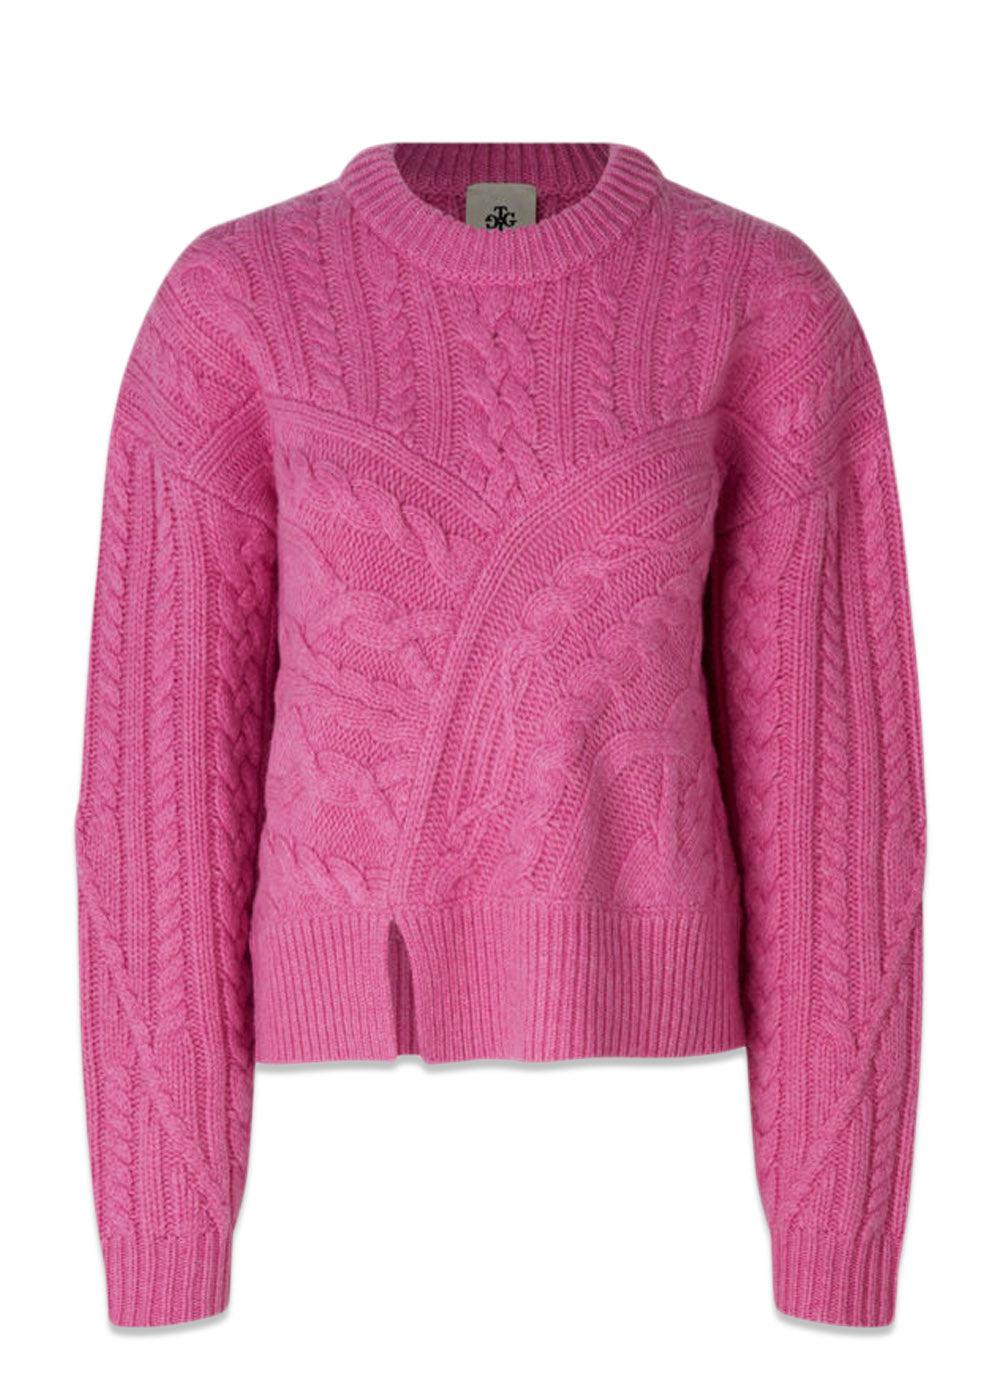 The Garments Canada Knit - Raspberry. Køb strik her.